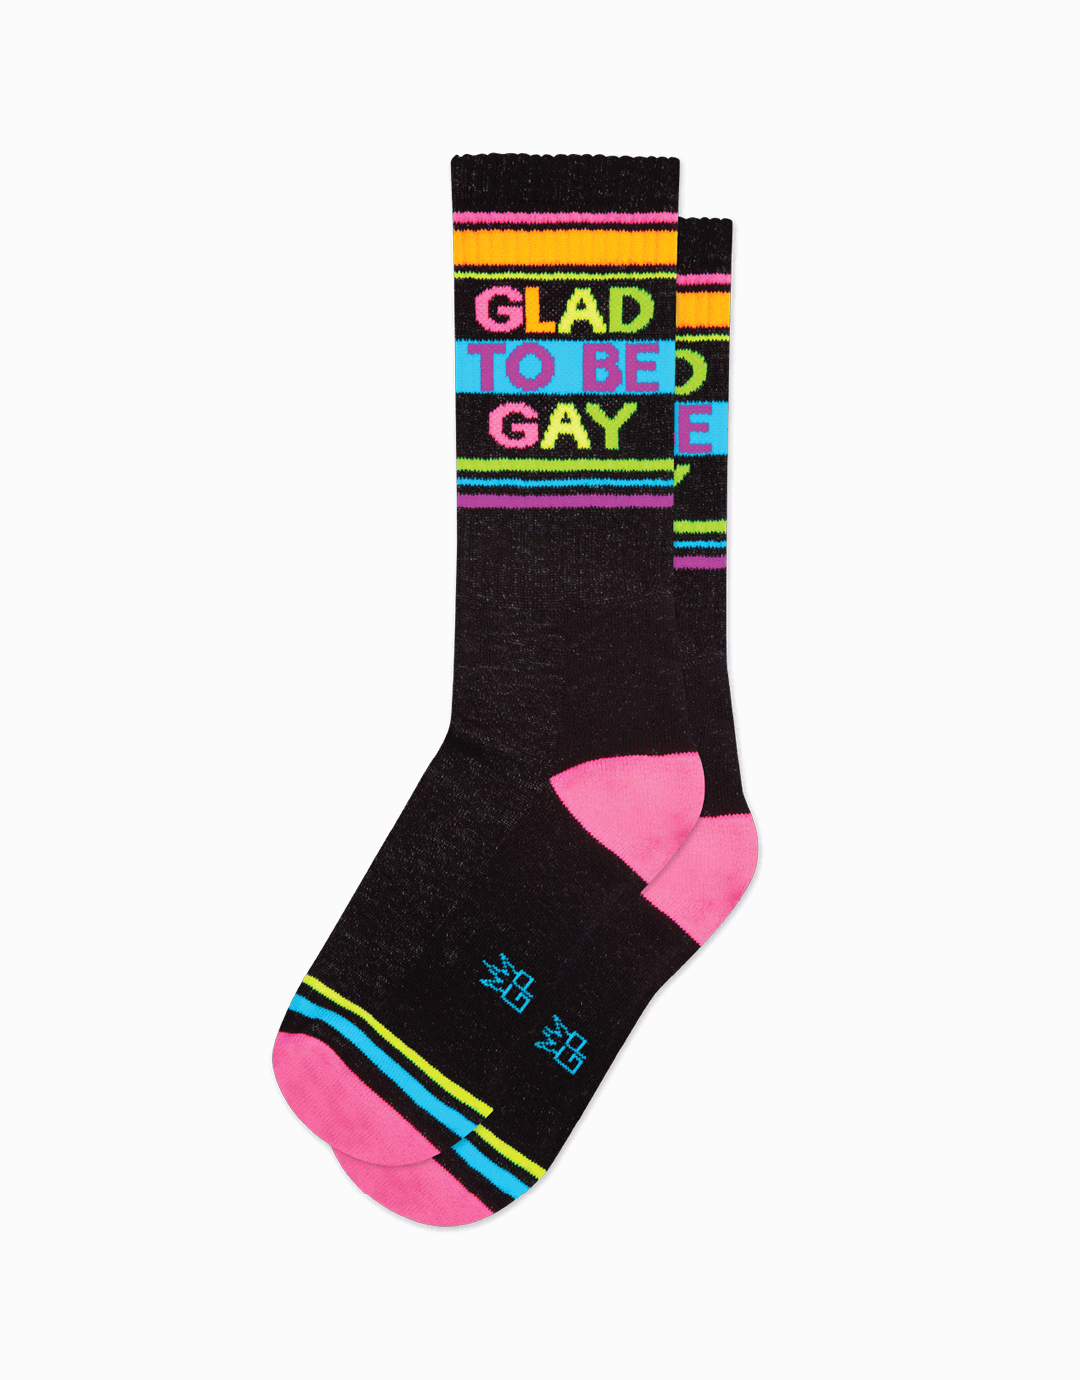 Glad To Be Gay Gym Socks